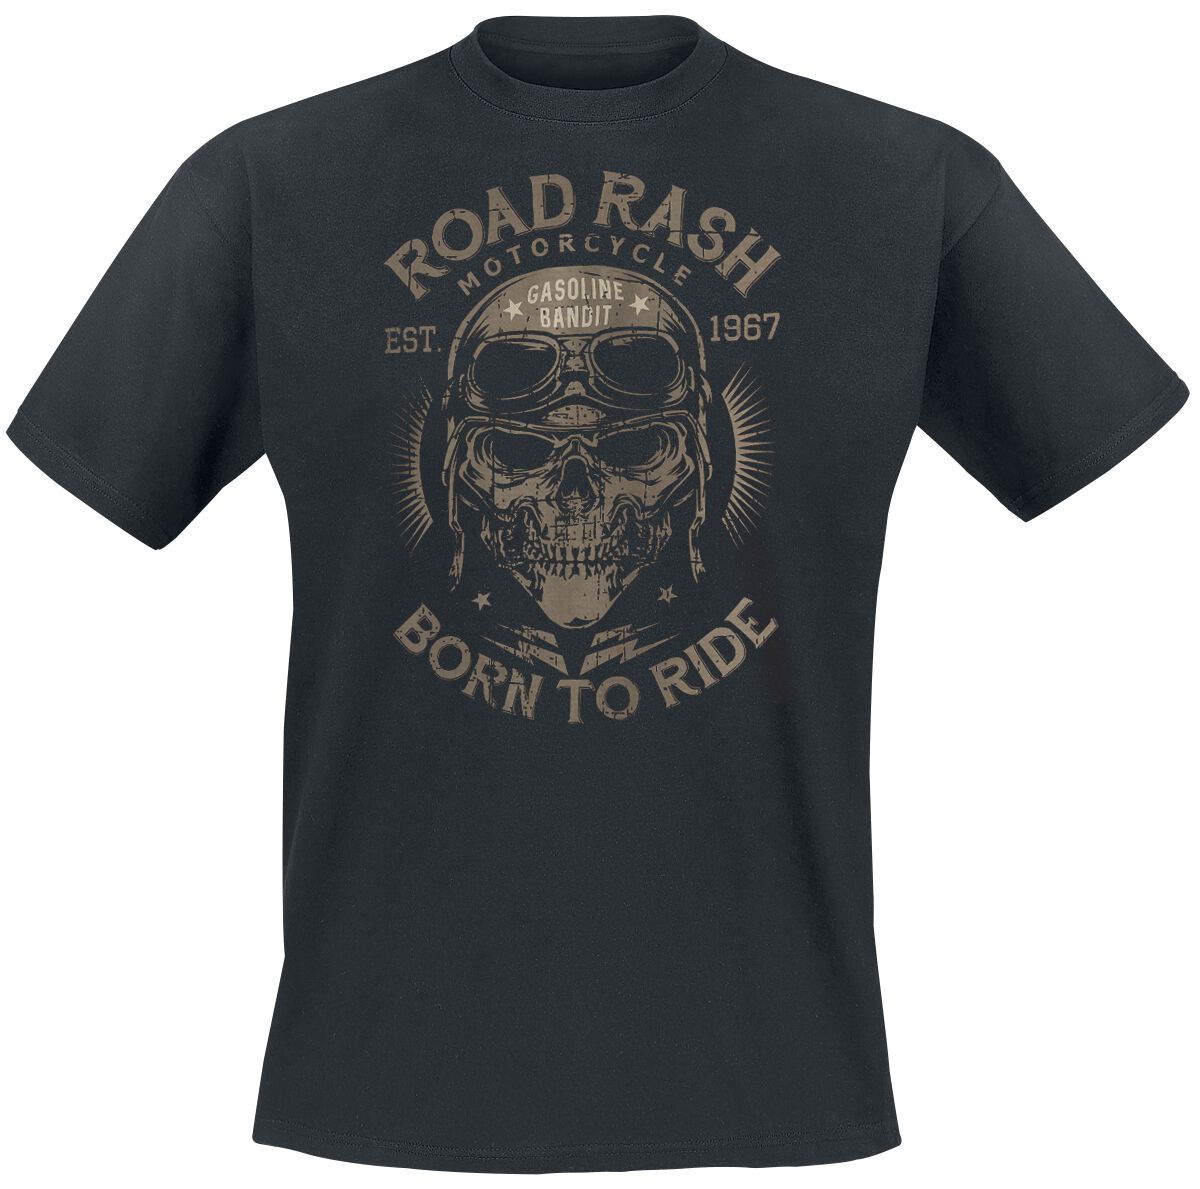 Gasoline Bandit Road Rash T-Shirt schwarz in L